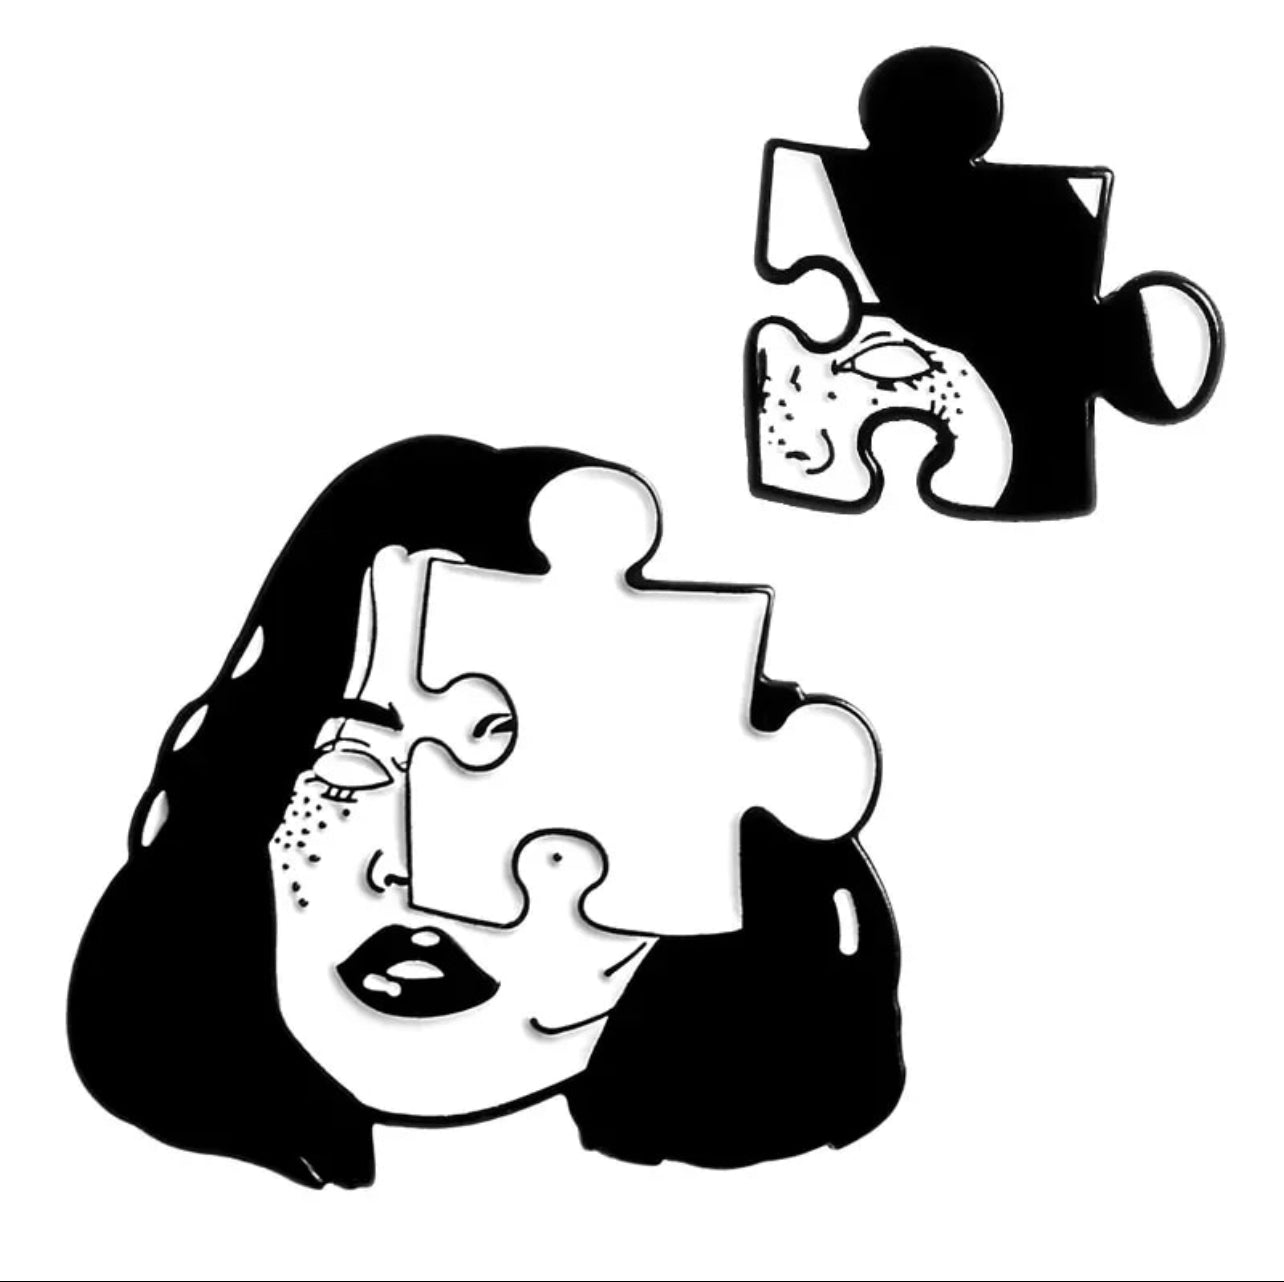 Puzzle woman